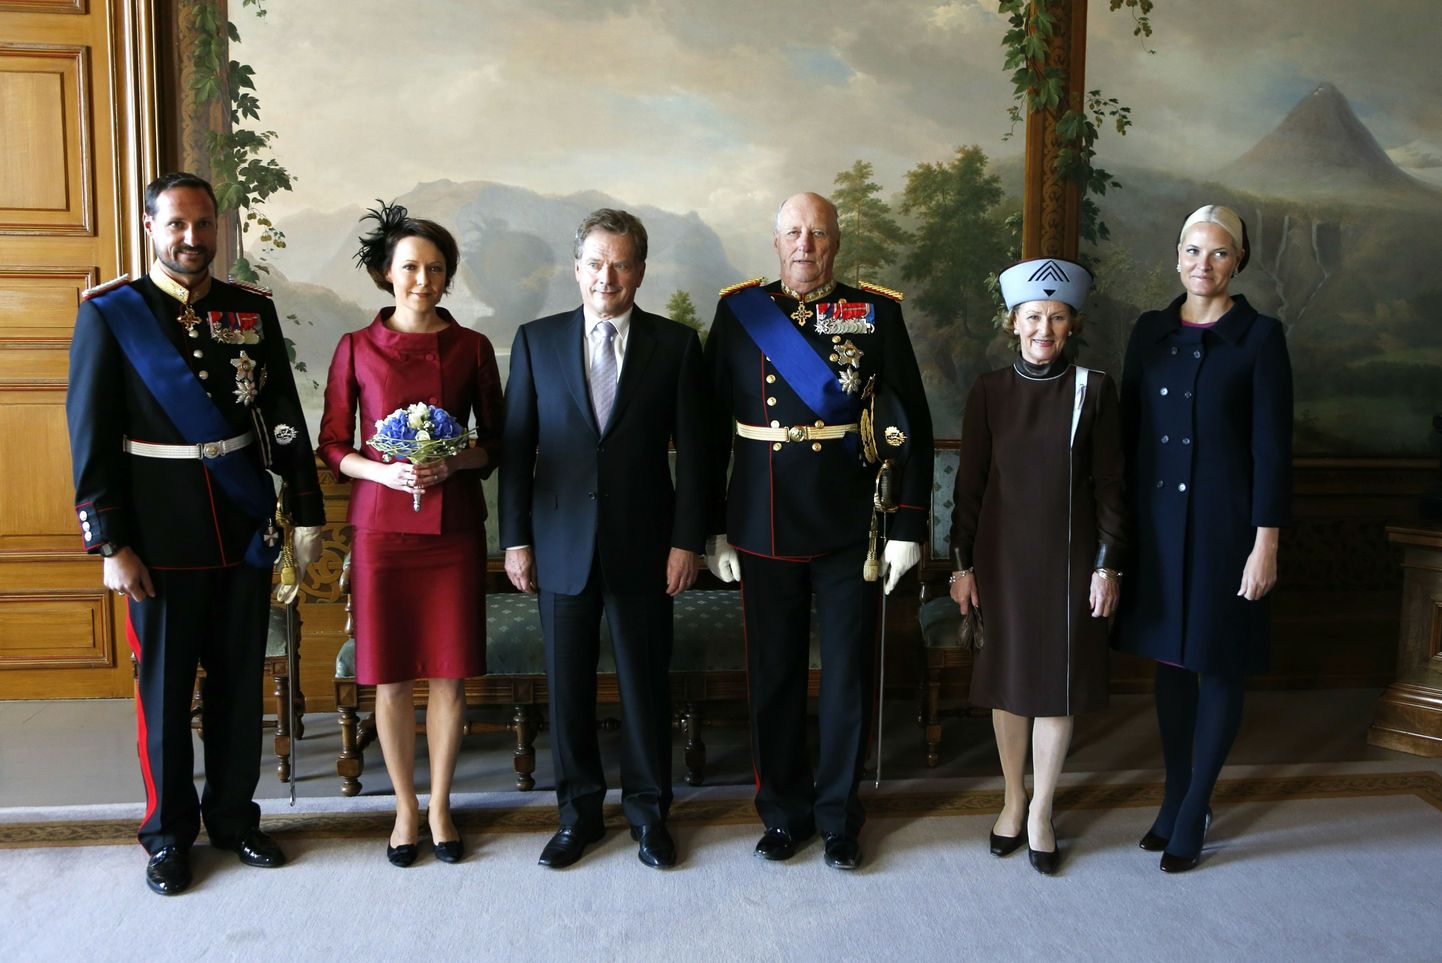 Grupipildil seisavad (vasakult) Norra kroonprints Haakon, Soome esileedi Jenni Haukio, president Sauli Niinistö, kuningas Harald, kuninganna Sonja ja kroonprintsess Mette Marit.